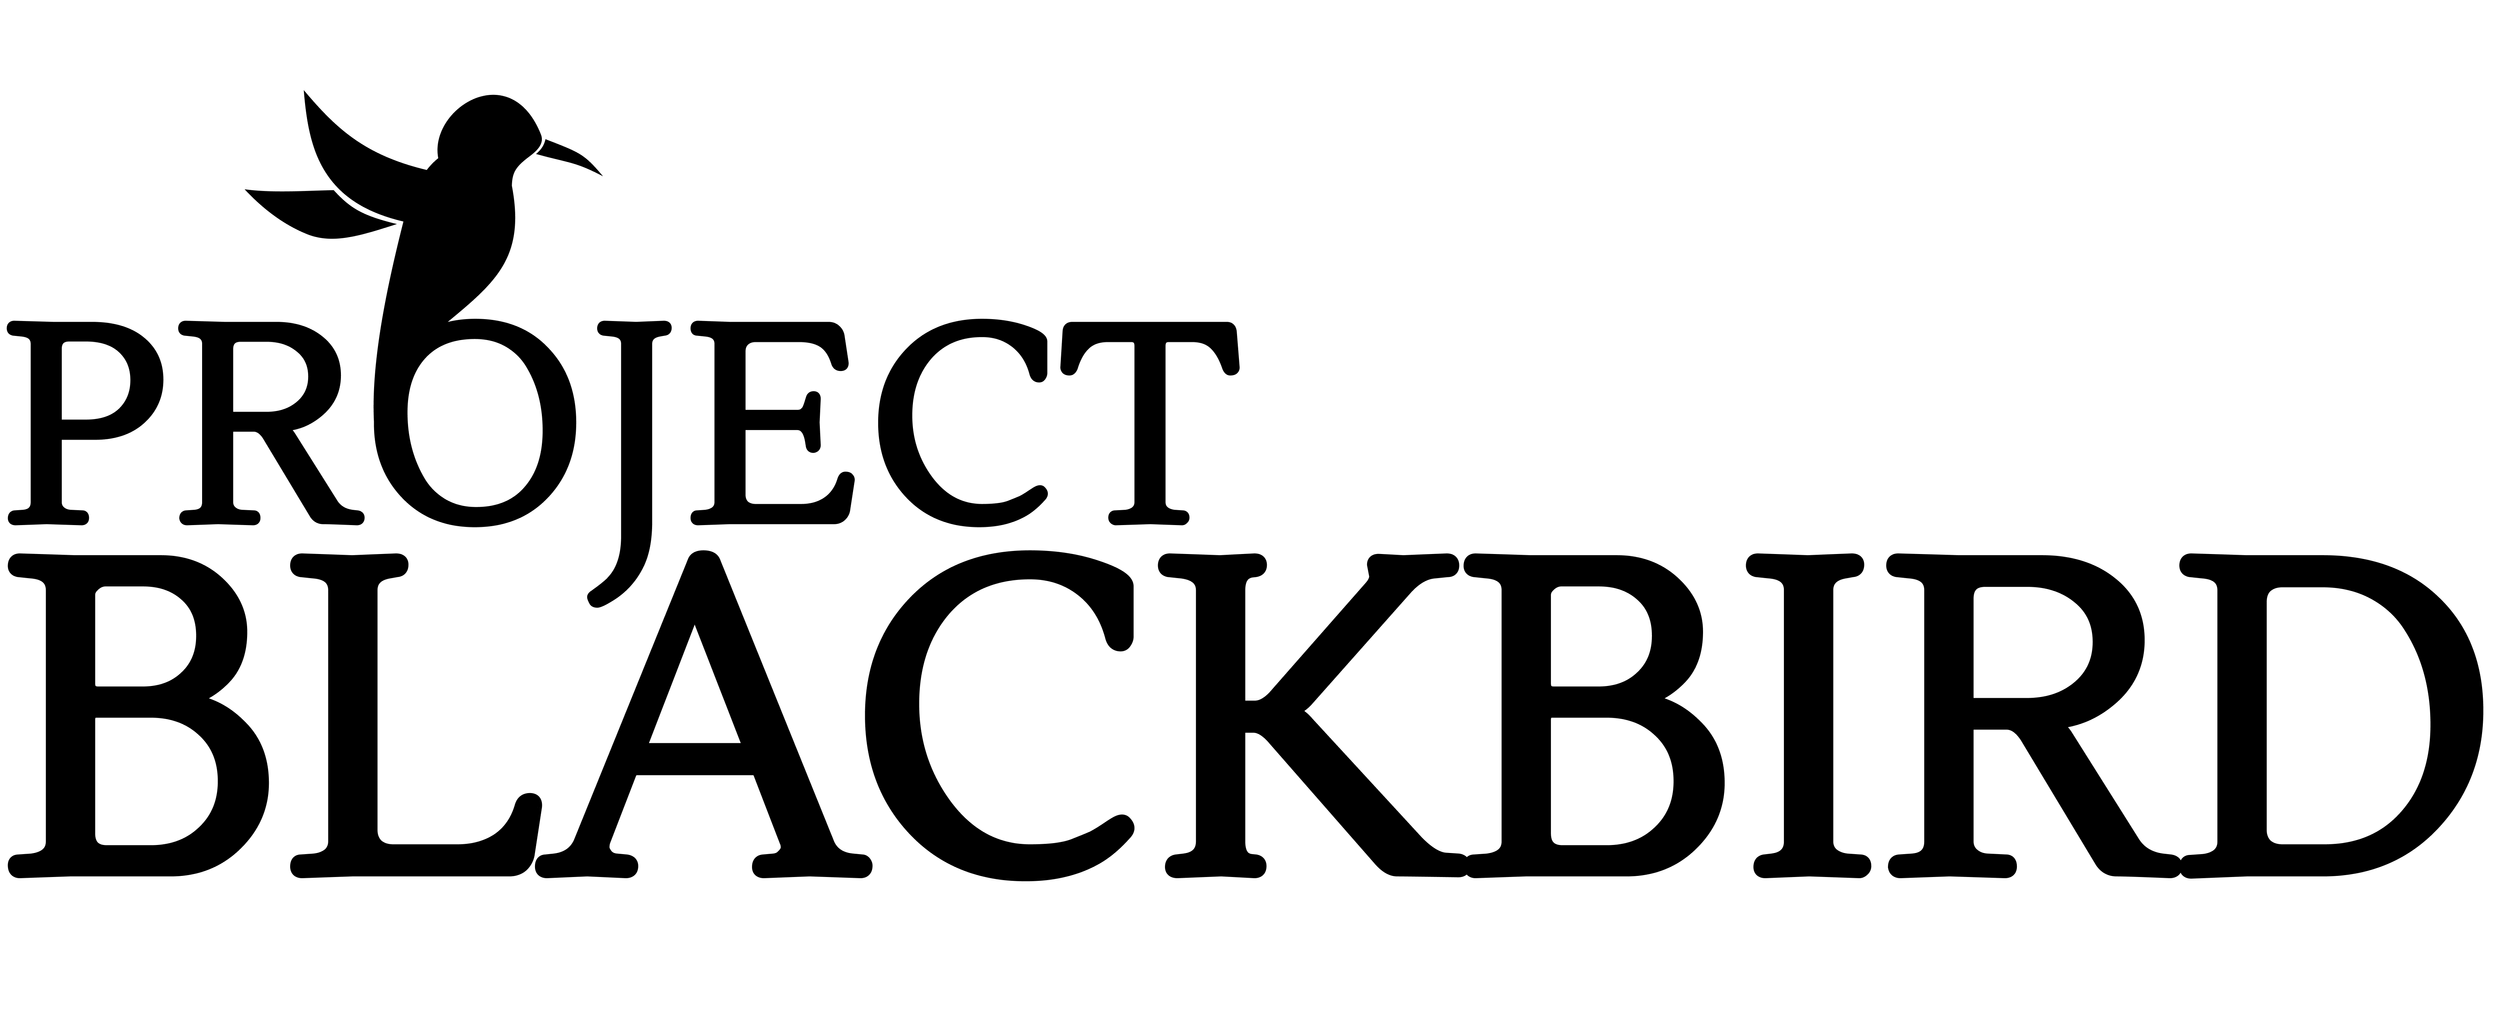 PBB Horizontal Logo 1.png